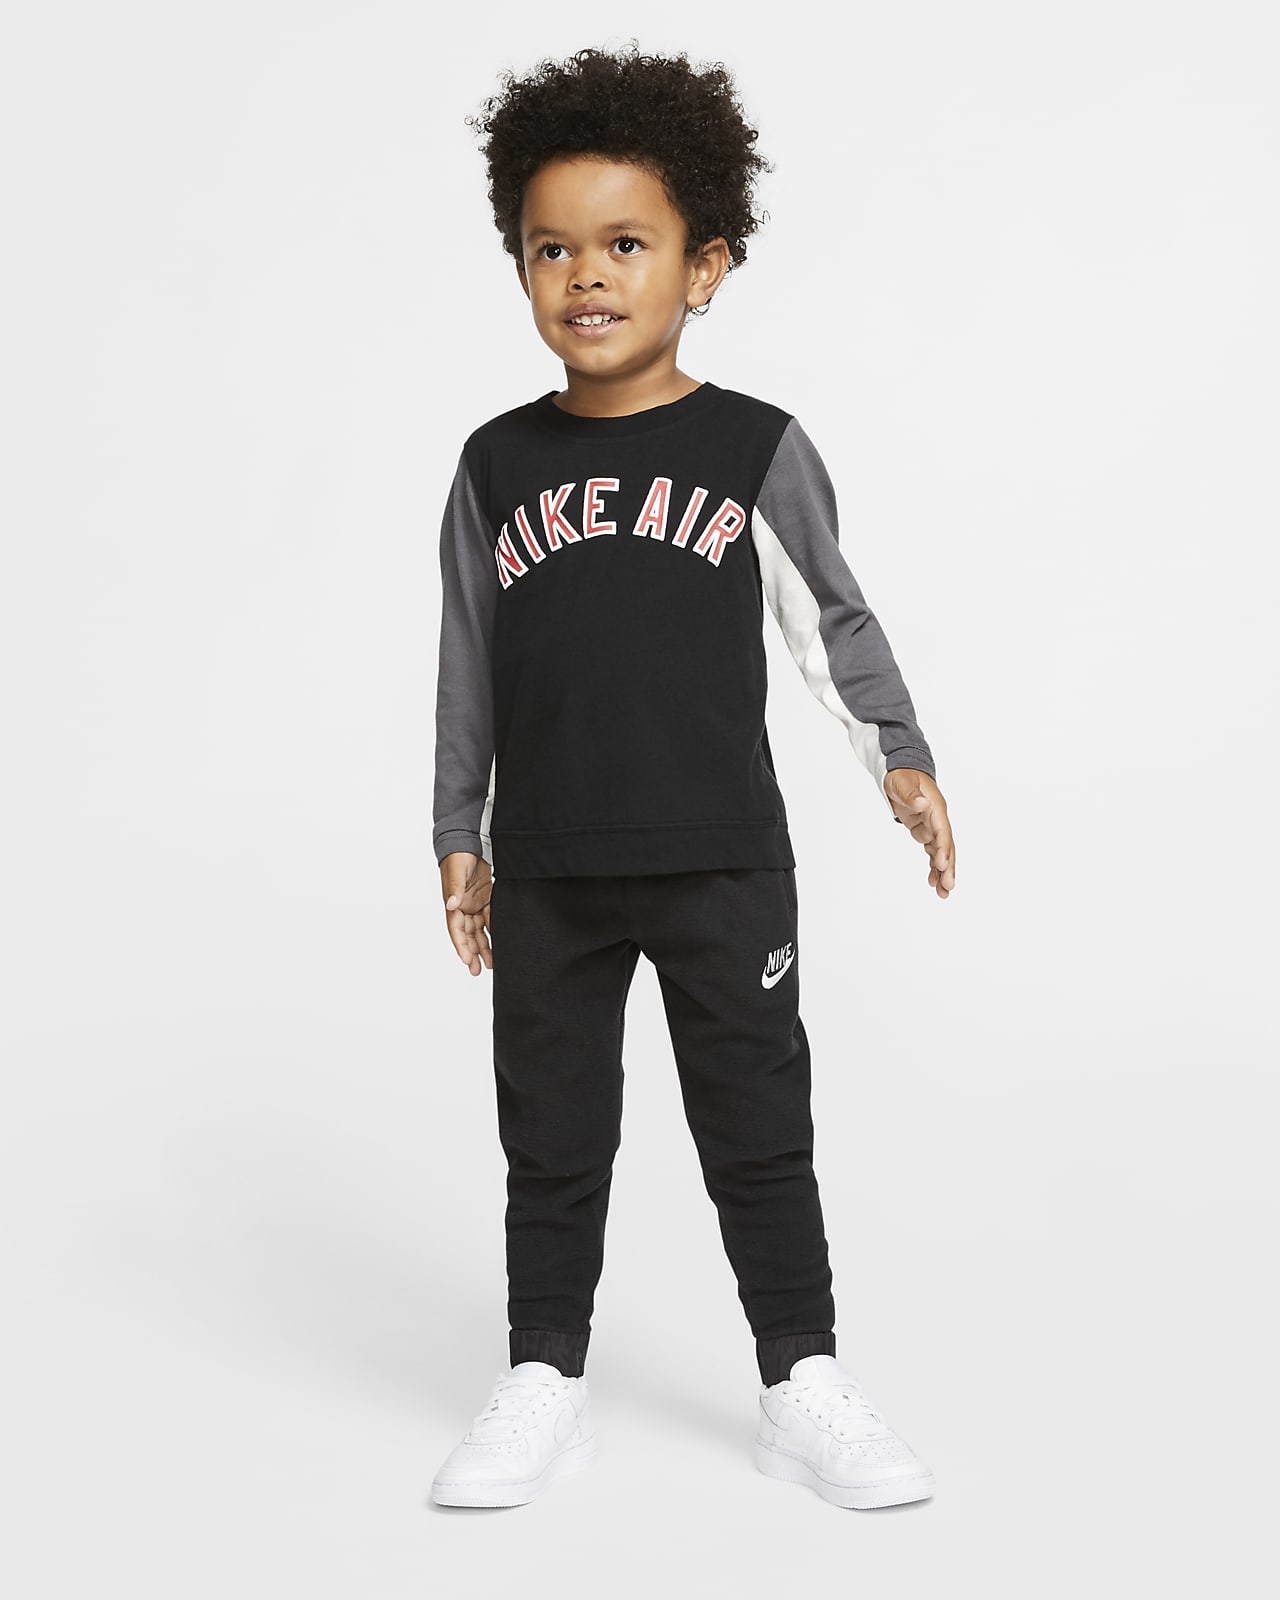 Stoffelijk overschot Arbitrage Tegenslag Nike Dri-FIT Toddler Winterized Joggers. Nike.com